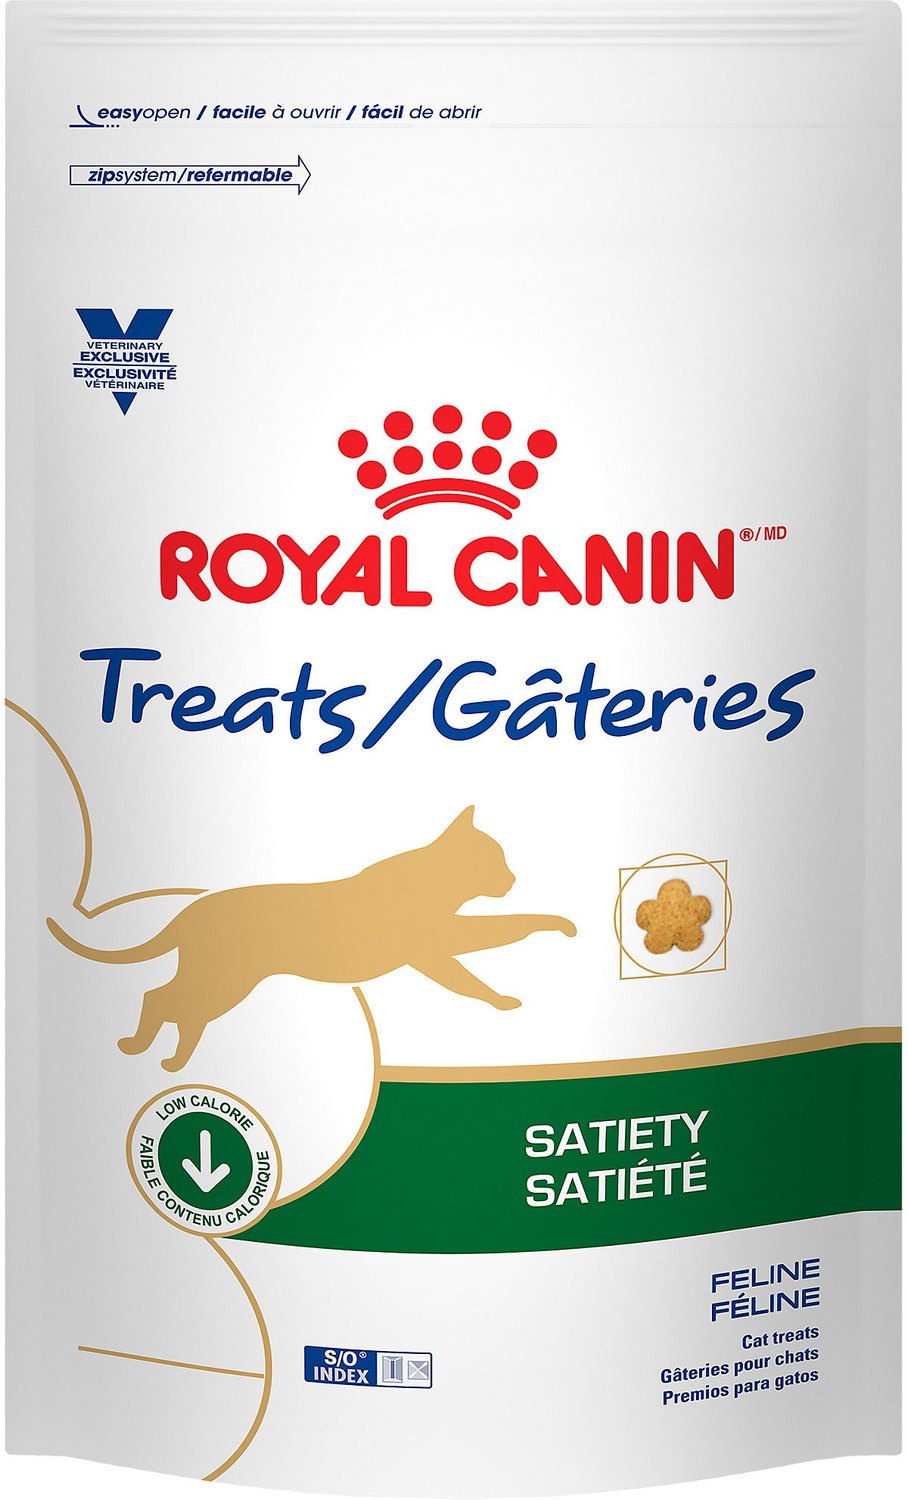 Royal Canin Feline Satiety Weight Management Off 53 Www Usushimd Com